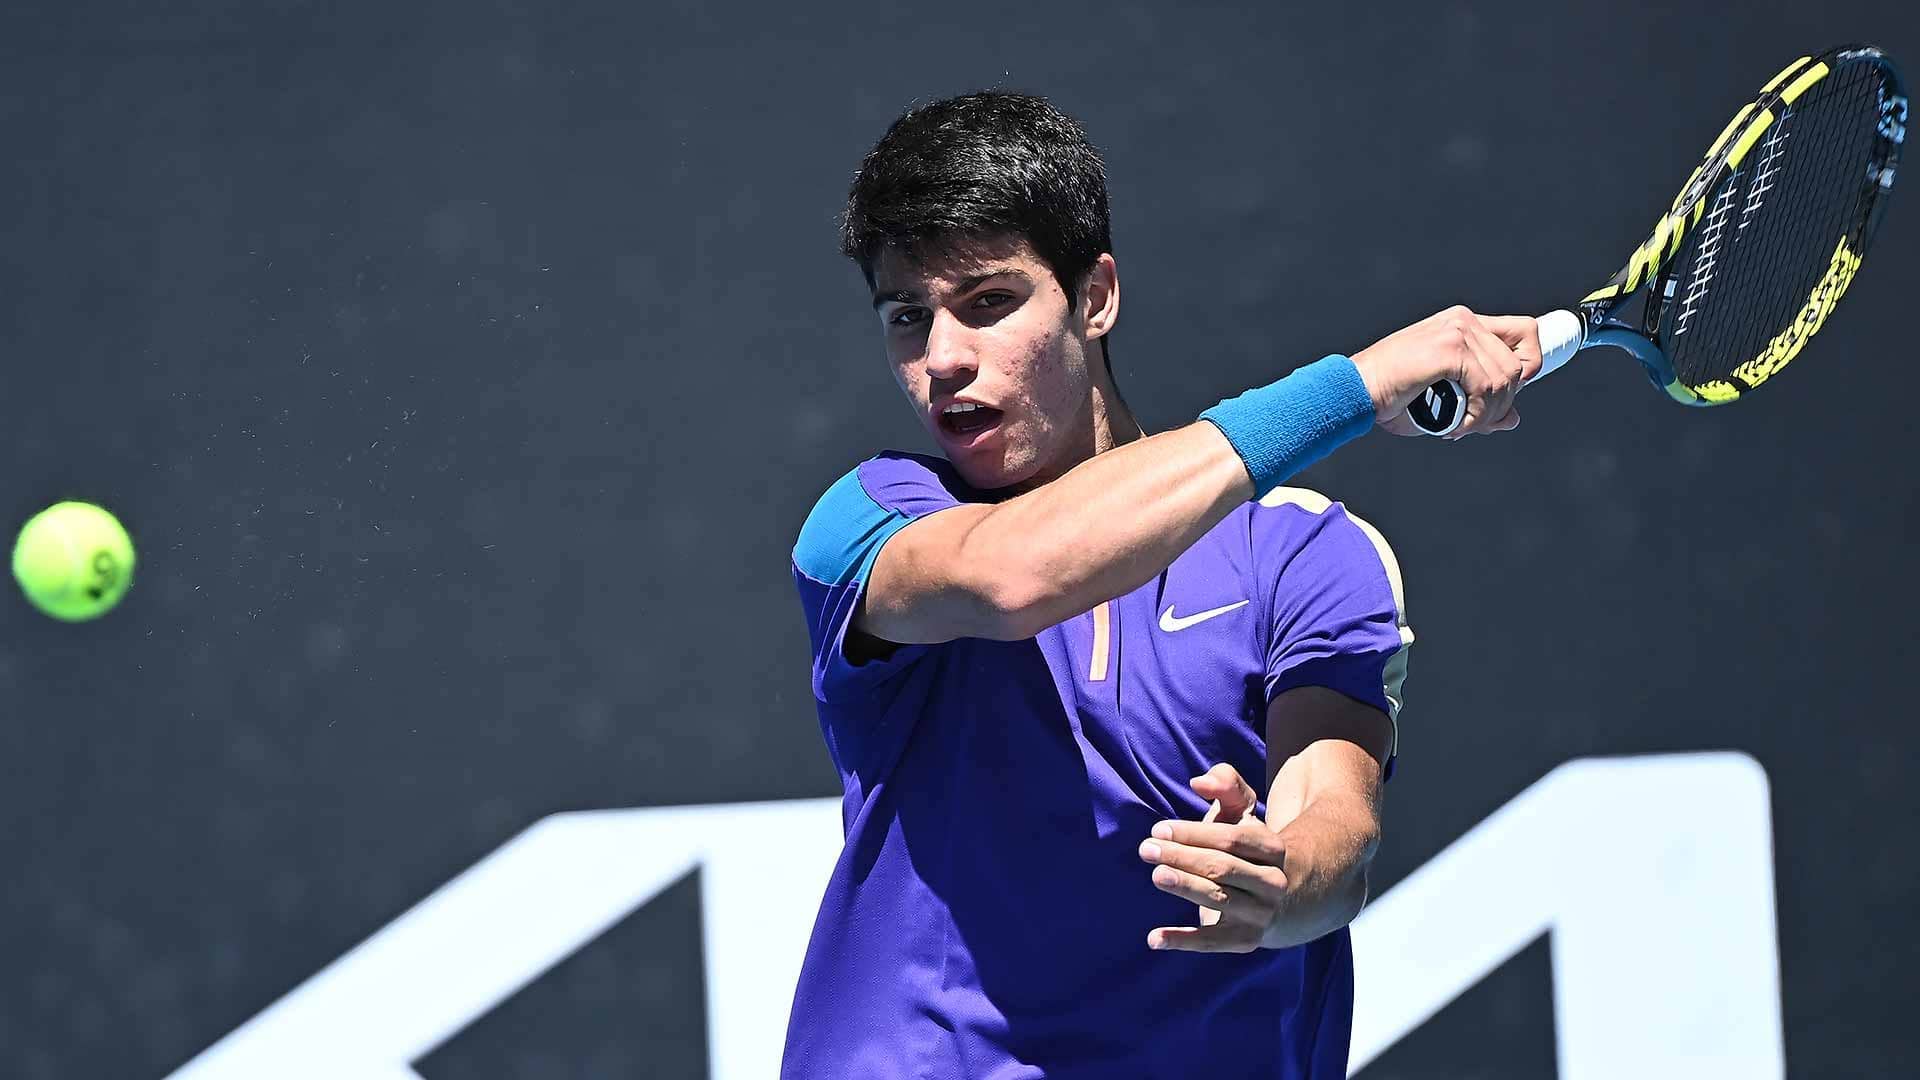 17-year-old Carlos Alcaraz wins Grand Slam debut at Australian Open |  ATP Tour